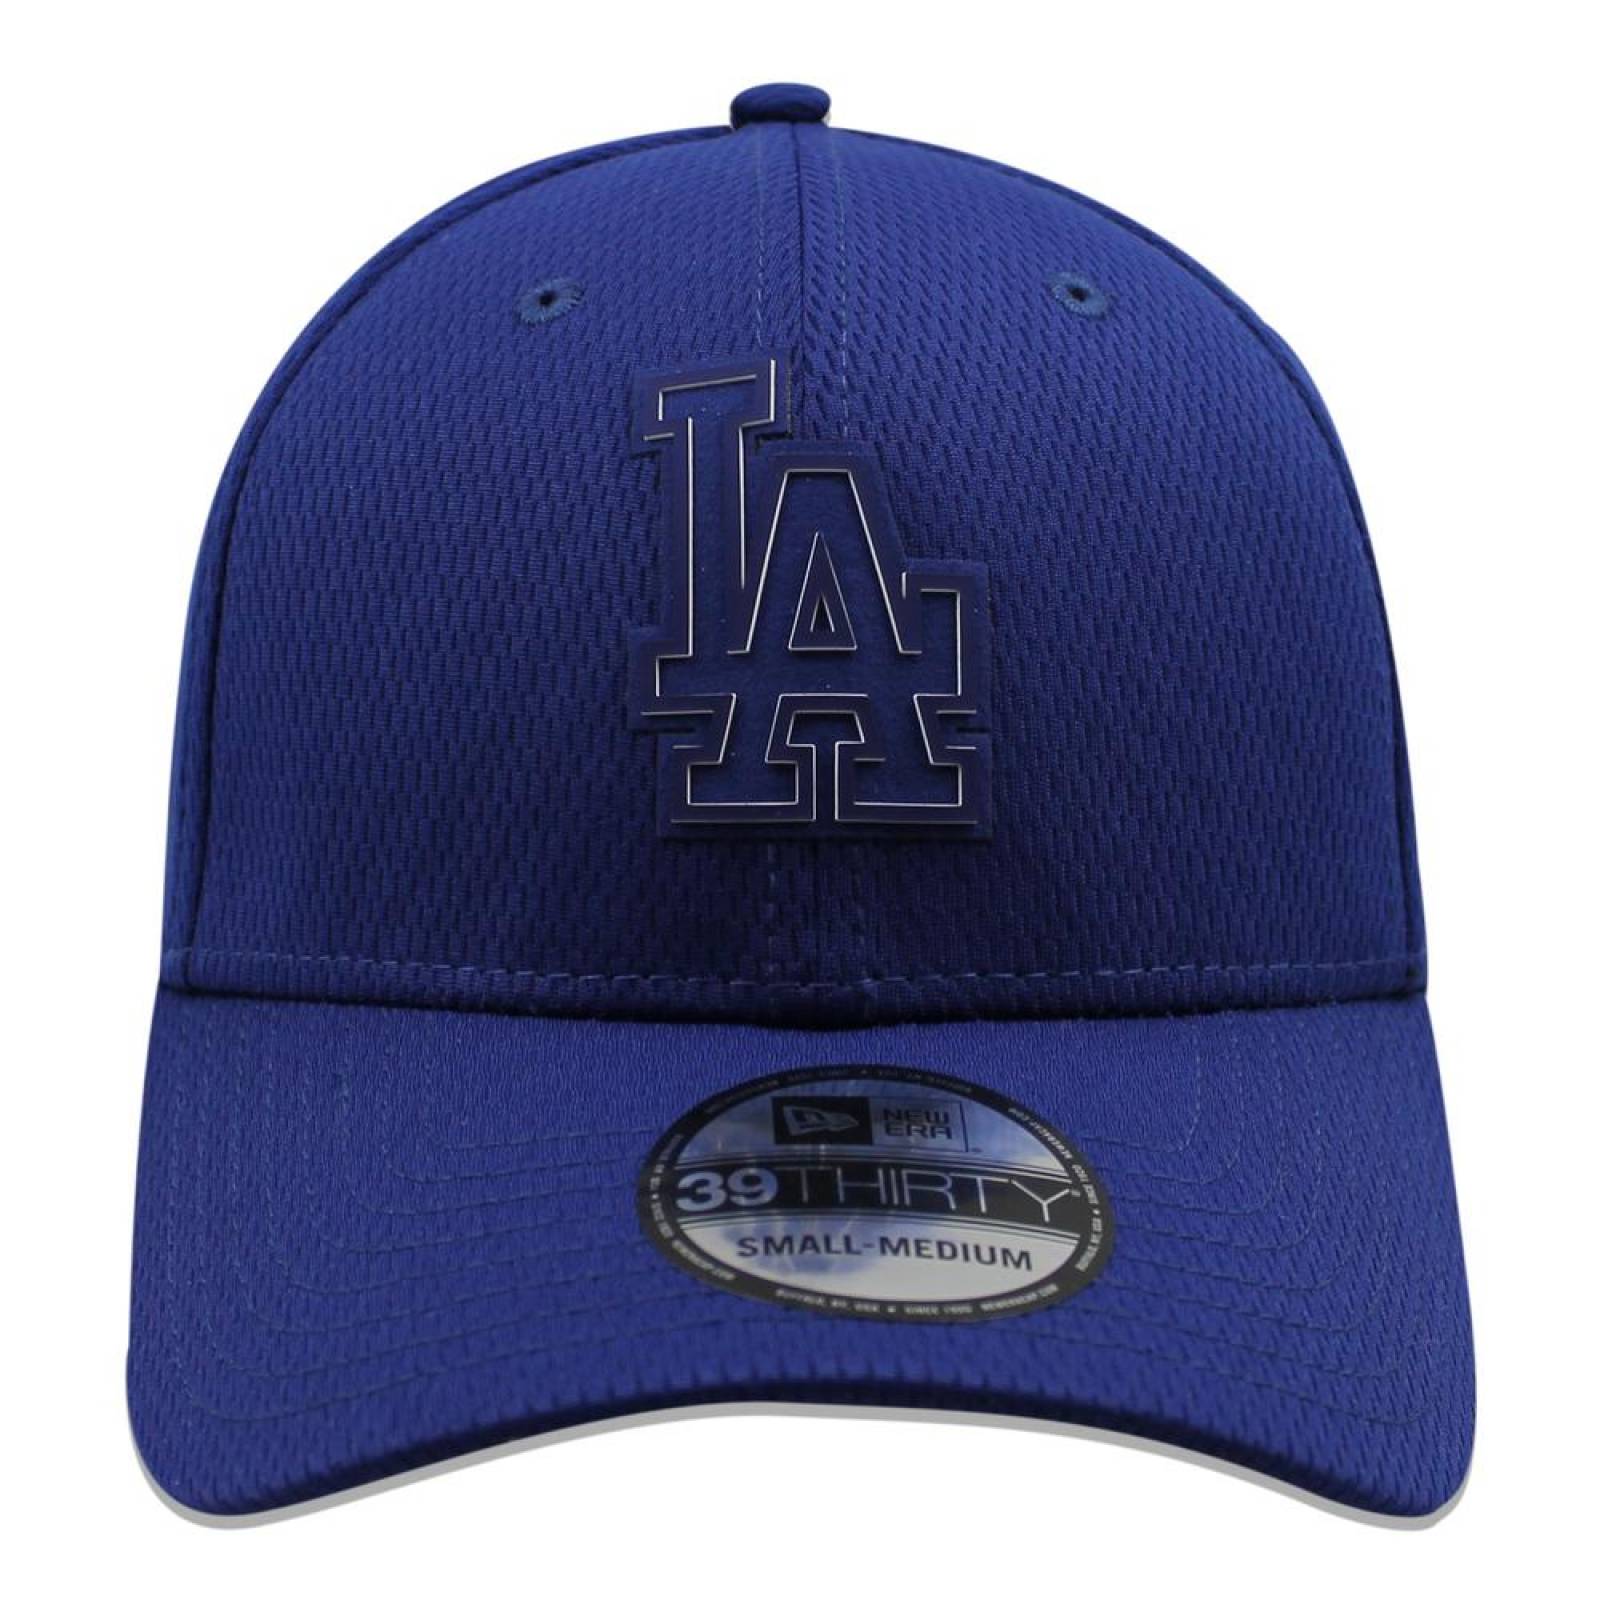 Gorra New Era 39 Thirty MLB Dodgers Club House 2019 Azul 